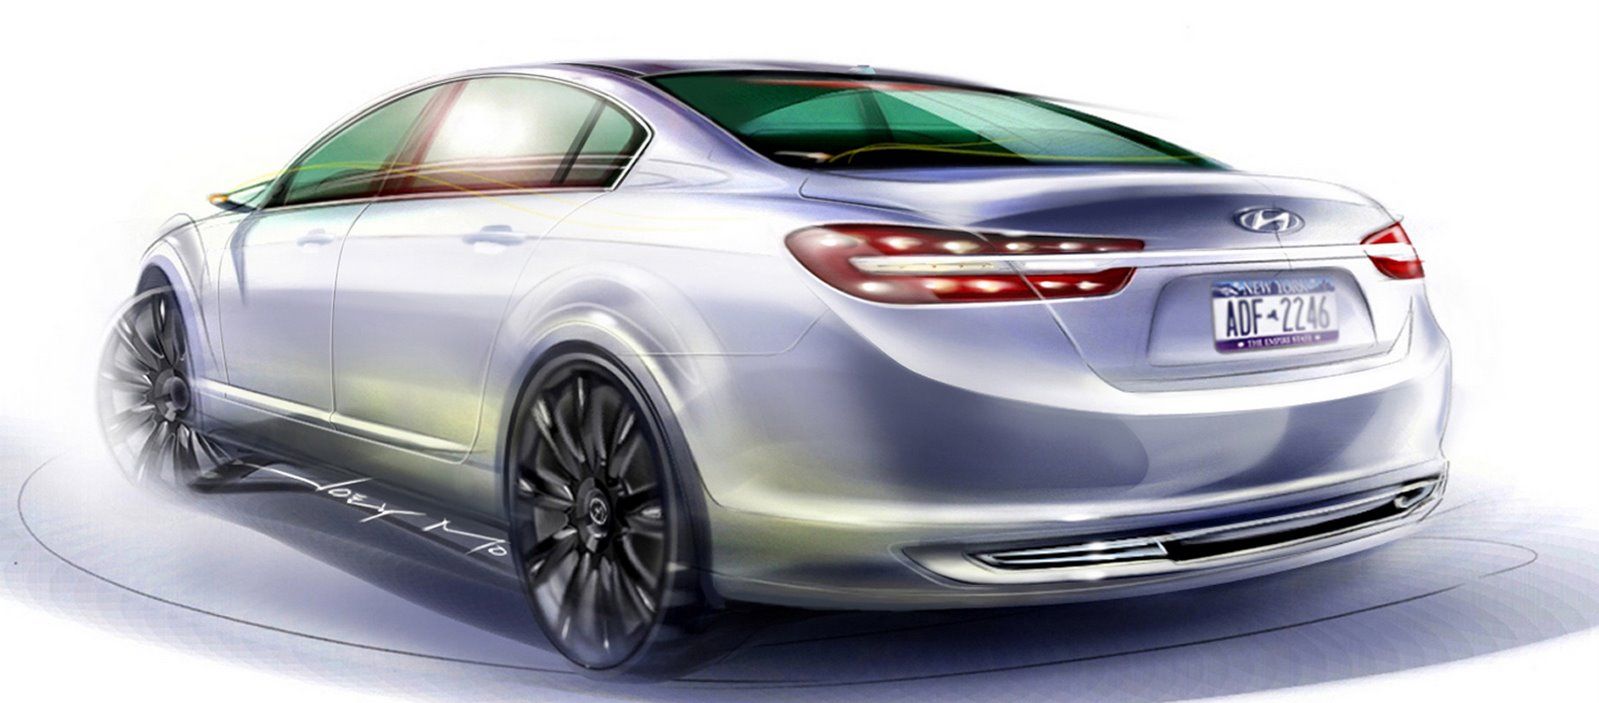 2007 Hyundai Genesis Concept